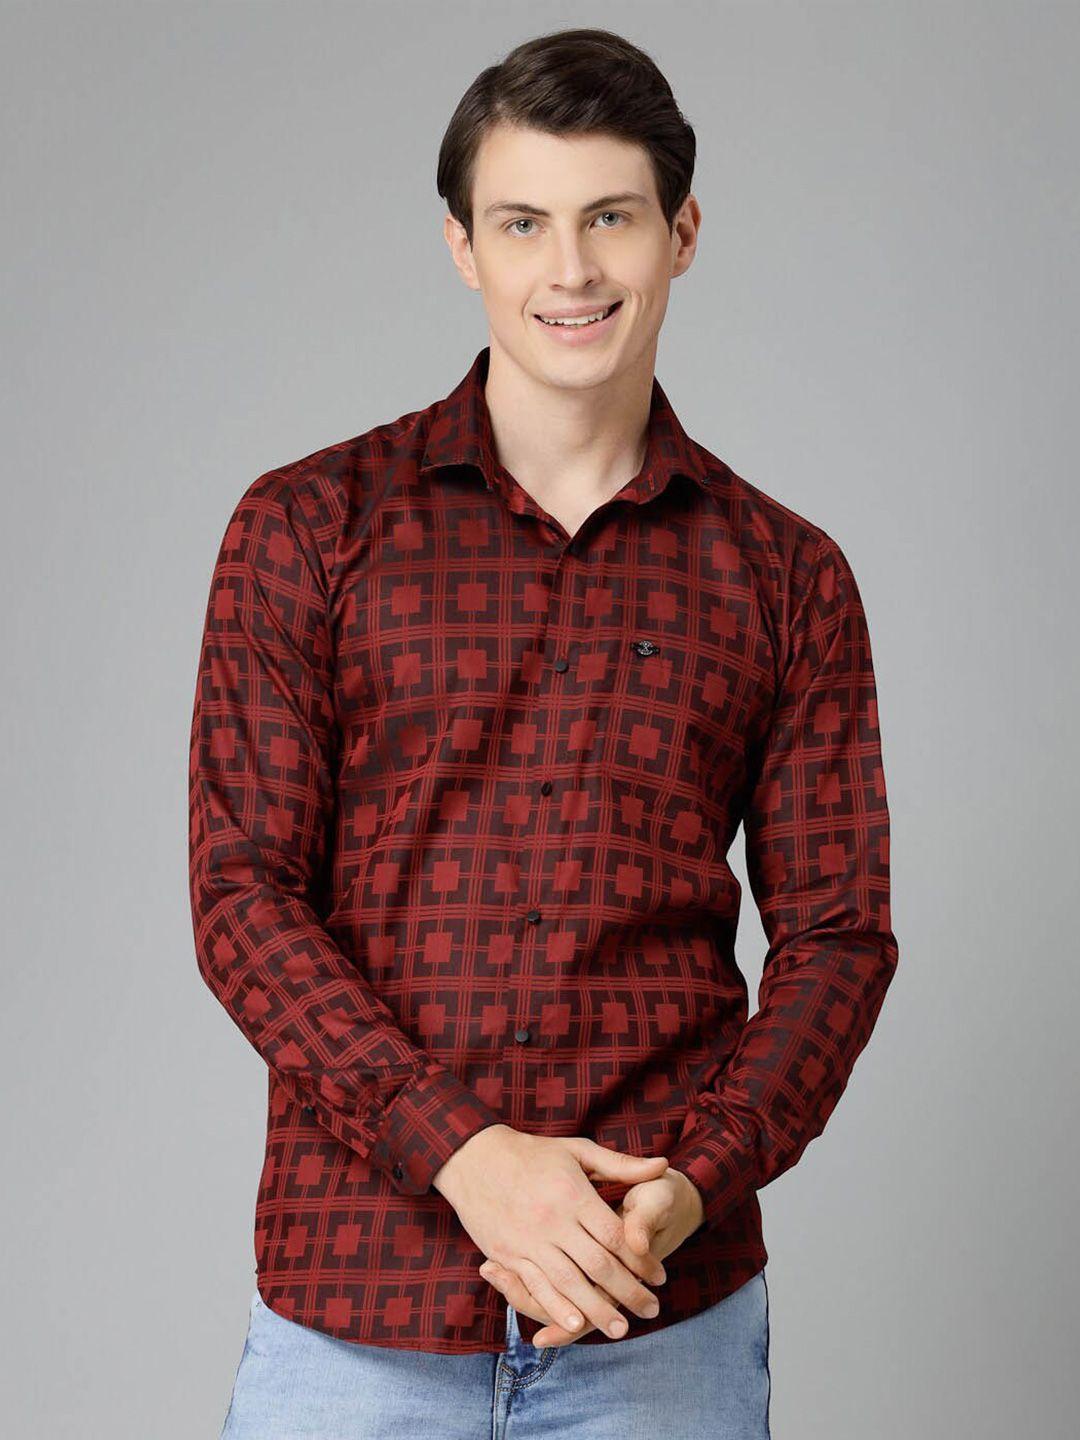 jadeberry-standard-geometric-printed-cotton-casual-shirt